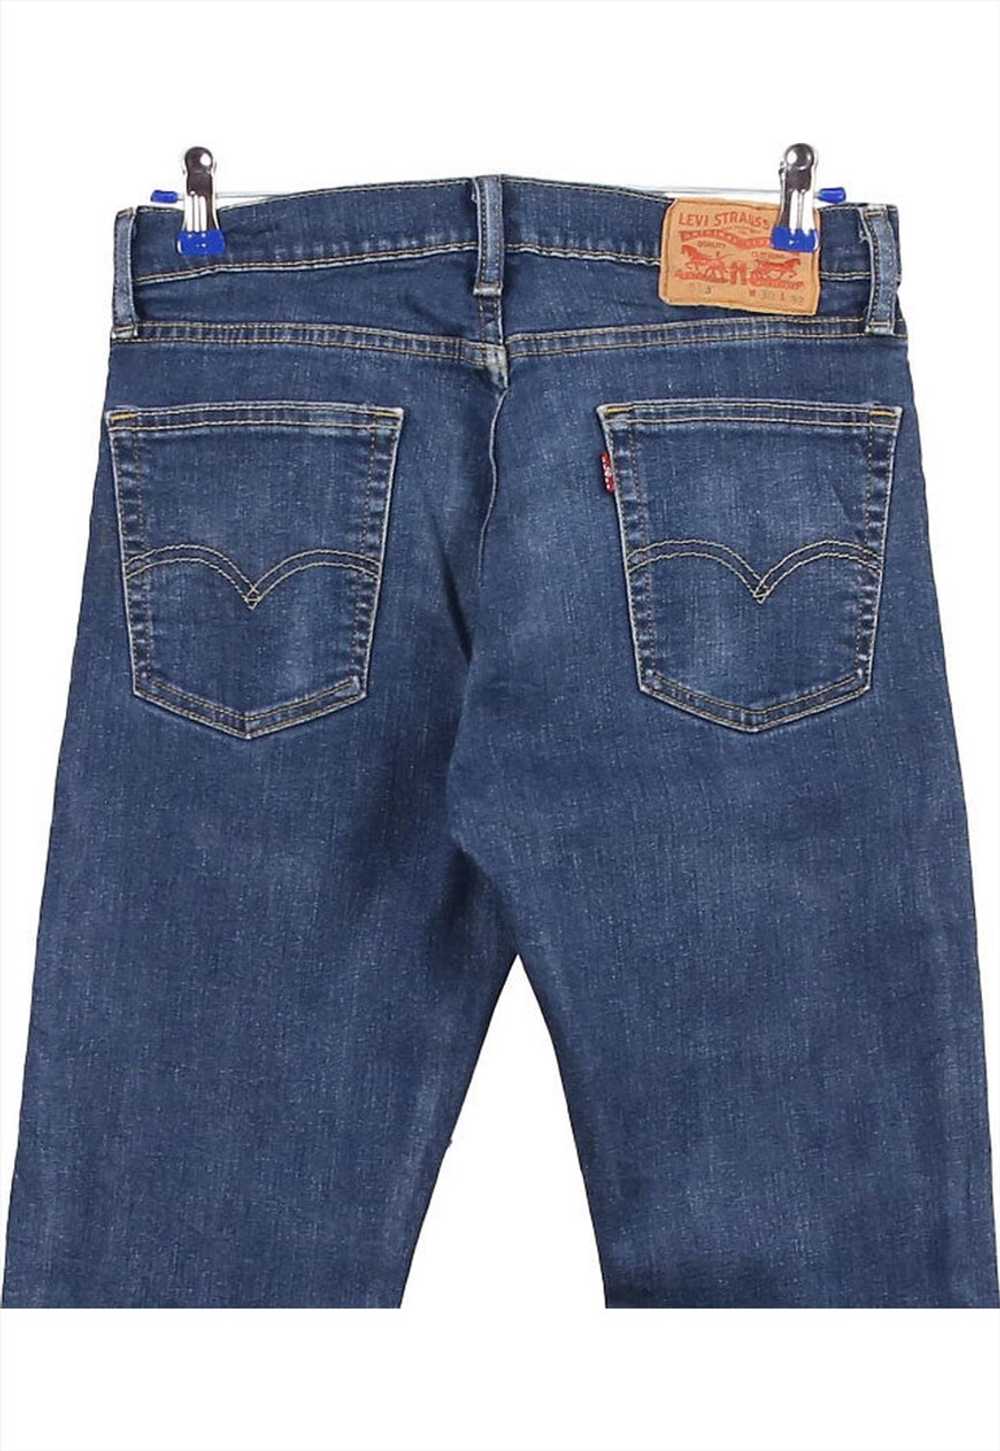 Vintage 90's Levi Strauss & Co. Jeans / Pants 513… - image 4